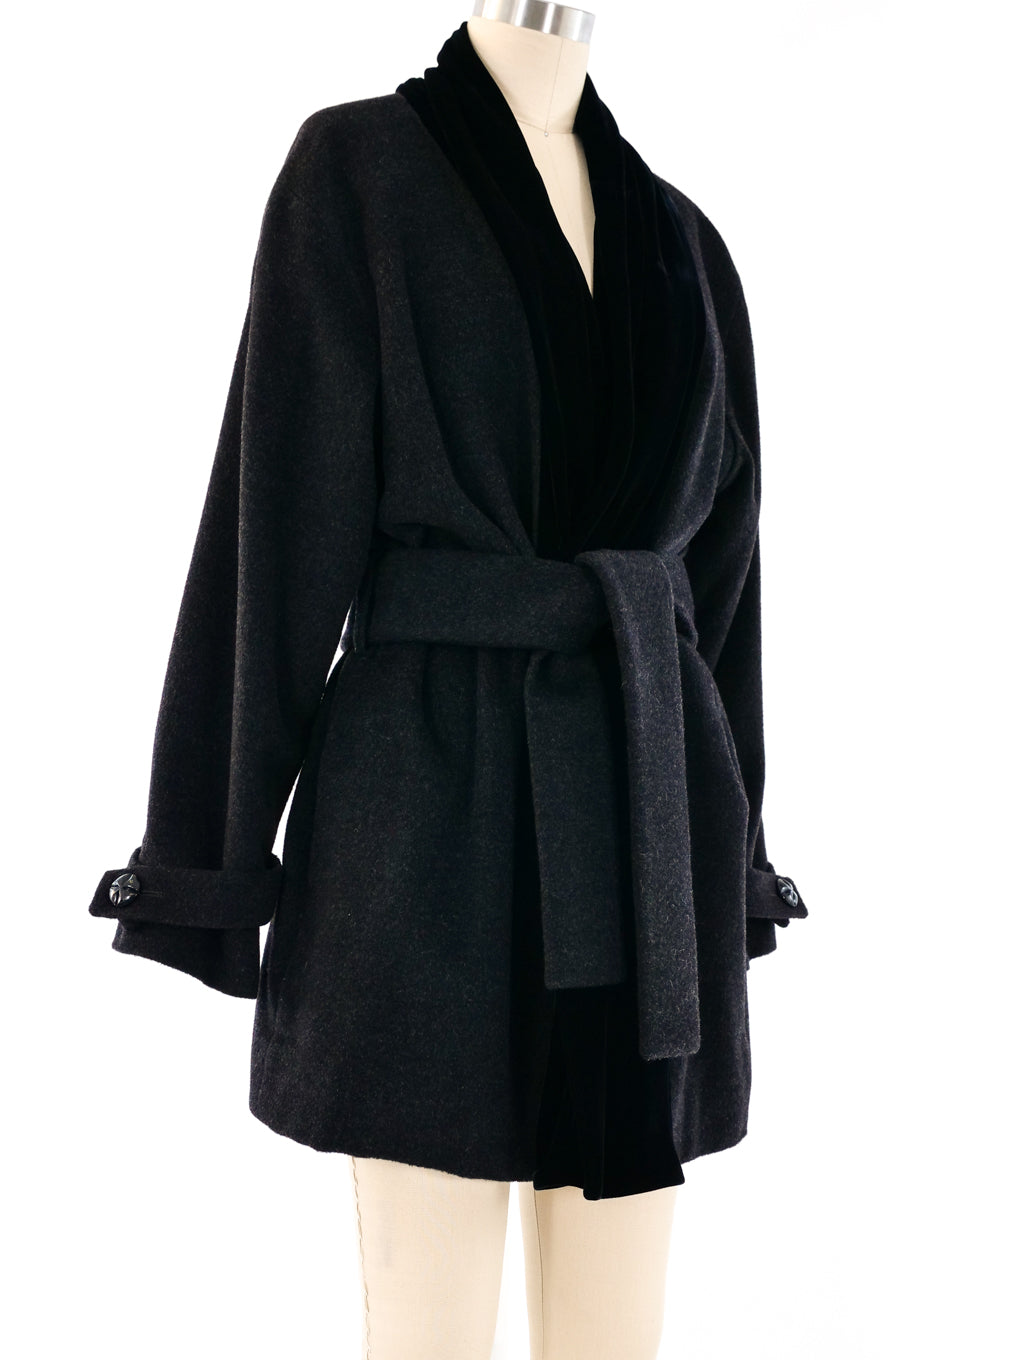 Yves Saint Laurent Cashmere Belted Coat